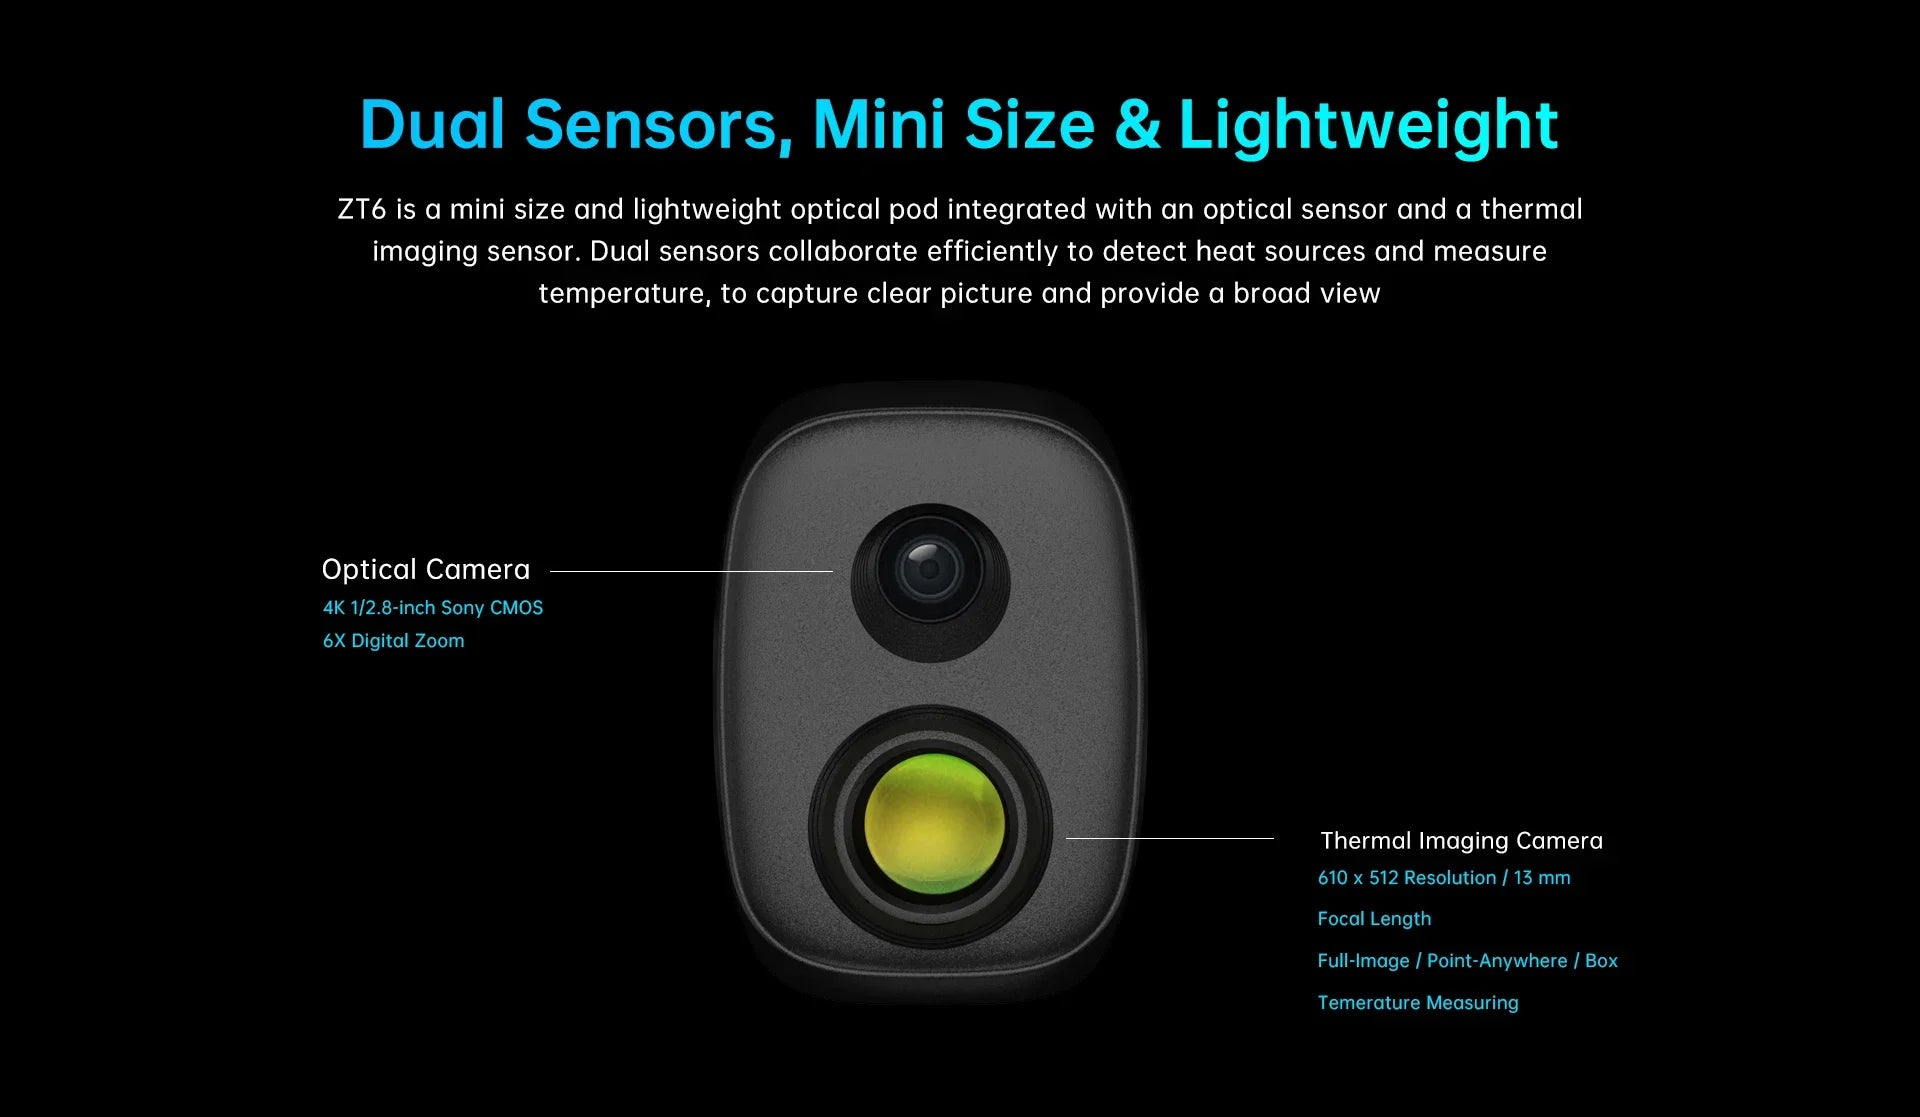 SIYI ZT6 Mini Dual Sensor Optical Pod, Compact thermal imaging camera with optical sensor for heat detection and image capture.